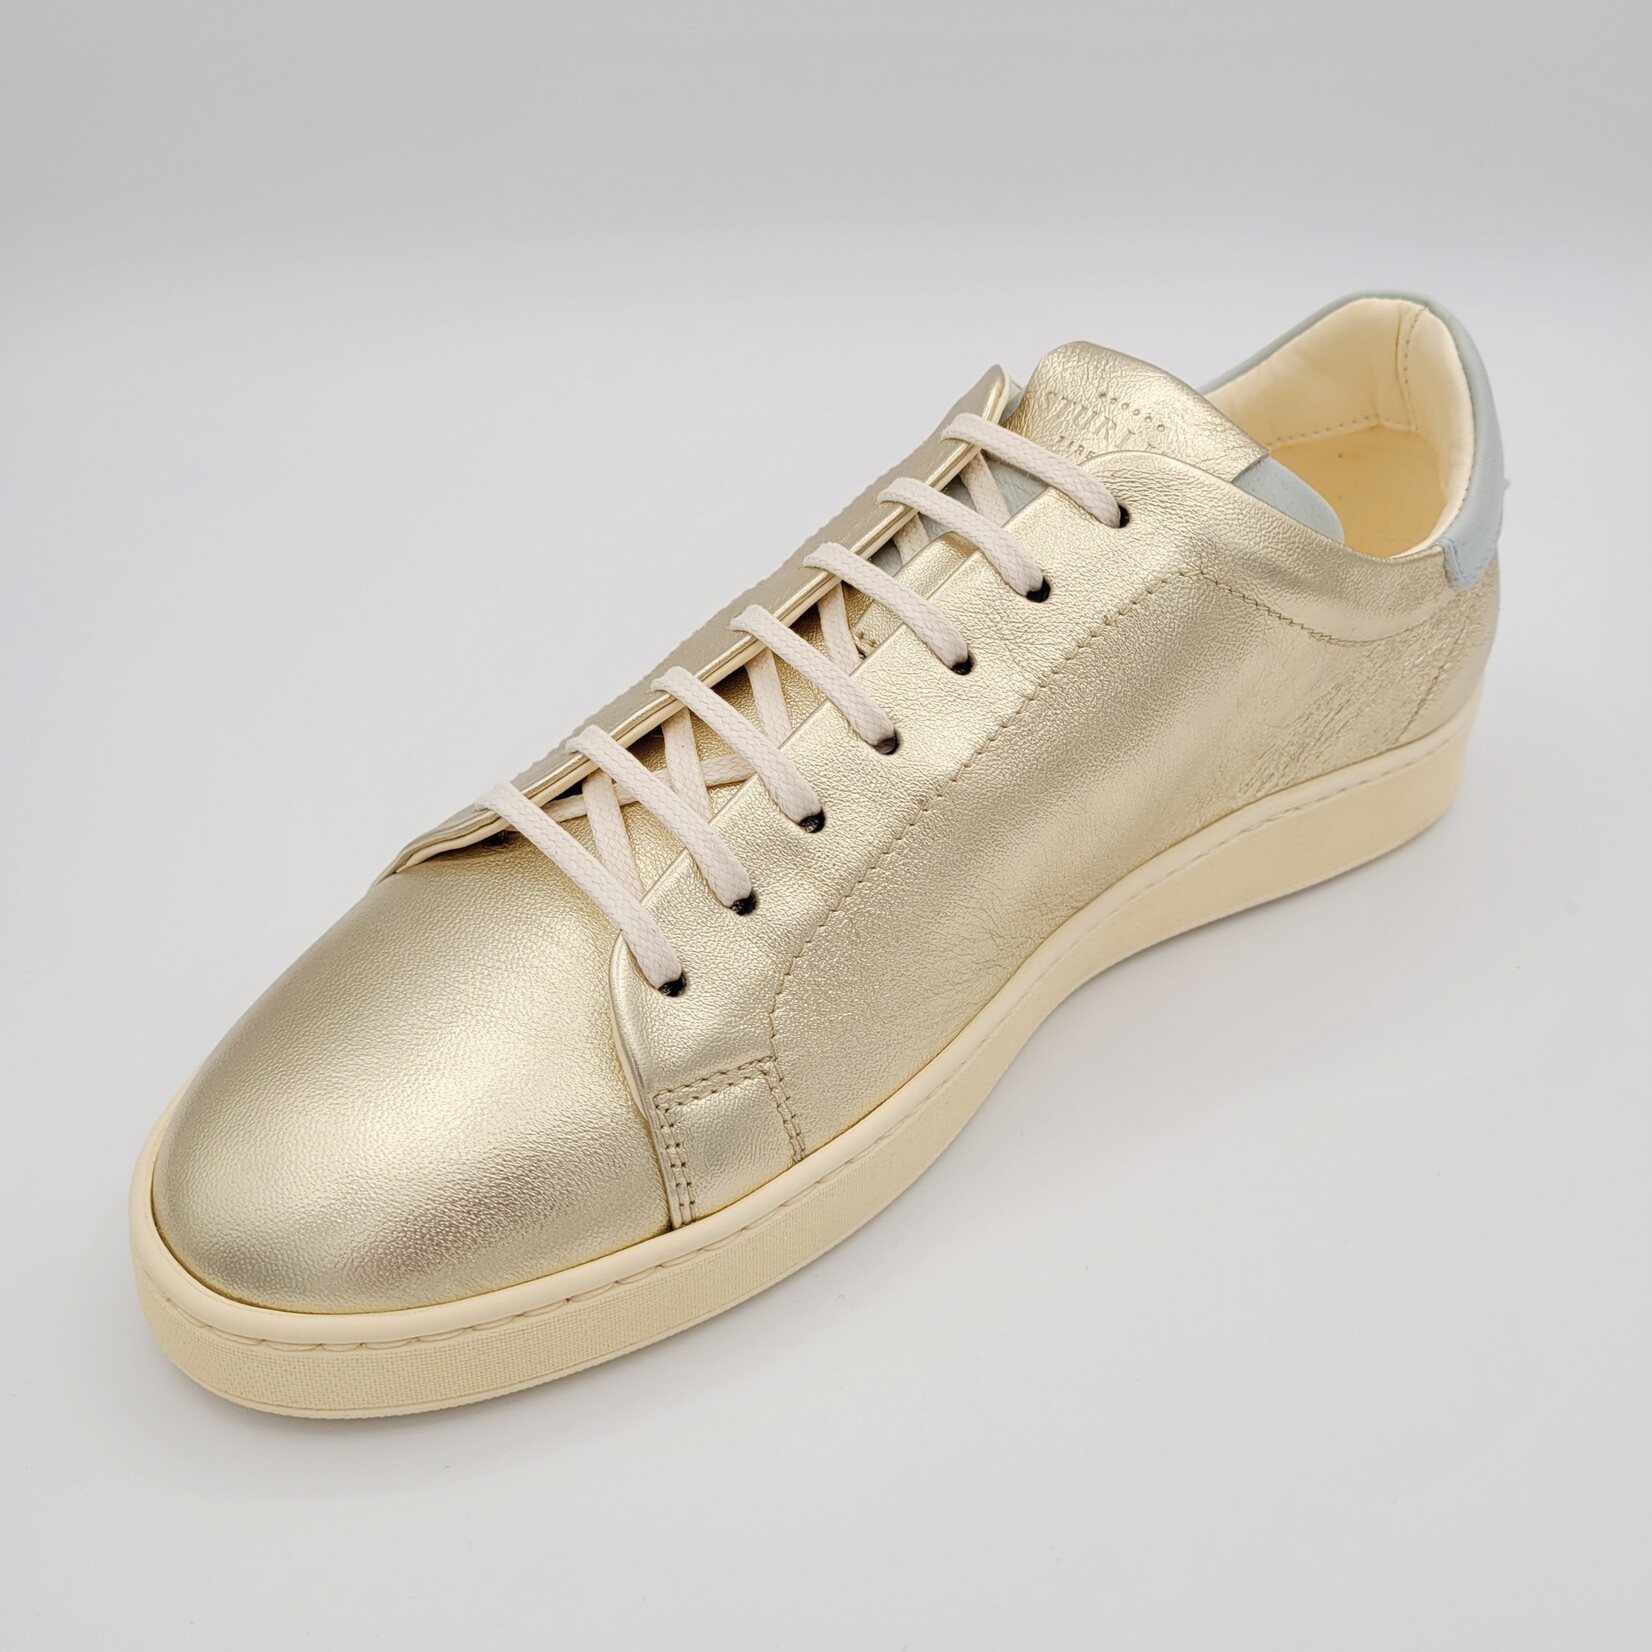 Sturlini Sturlini: Versilia Collection - Leather Sneaker